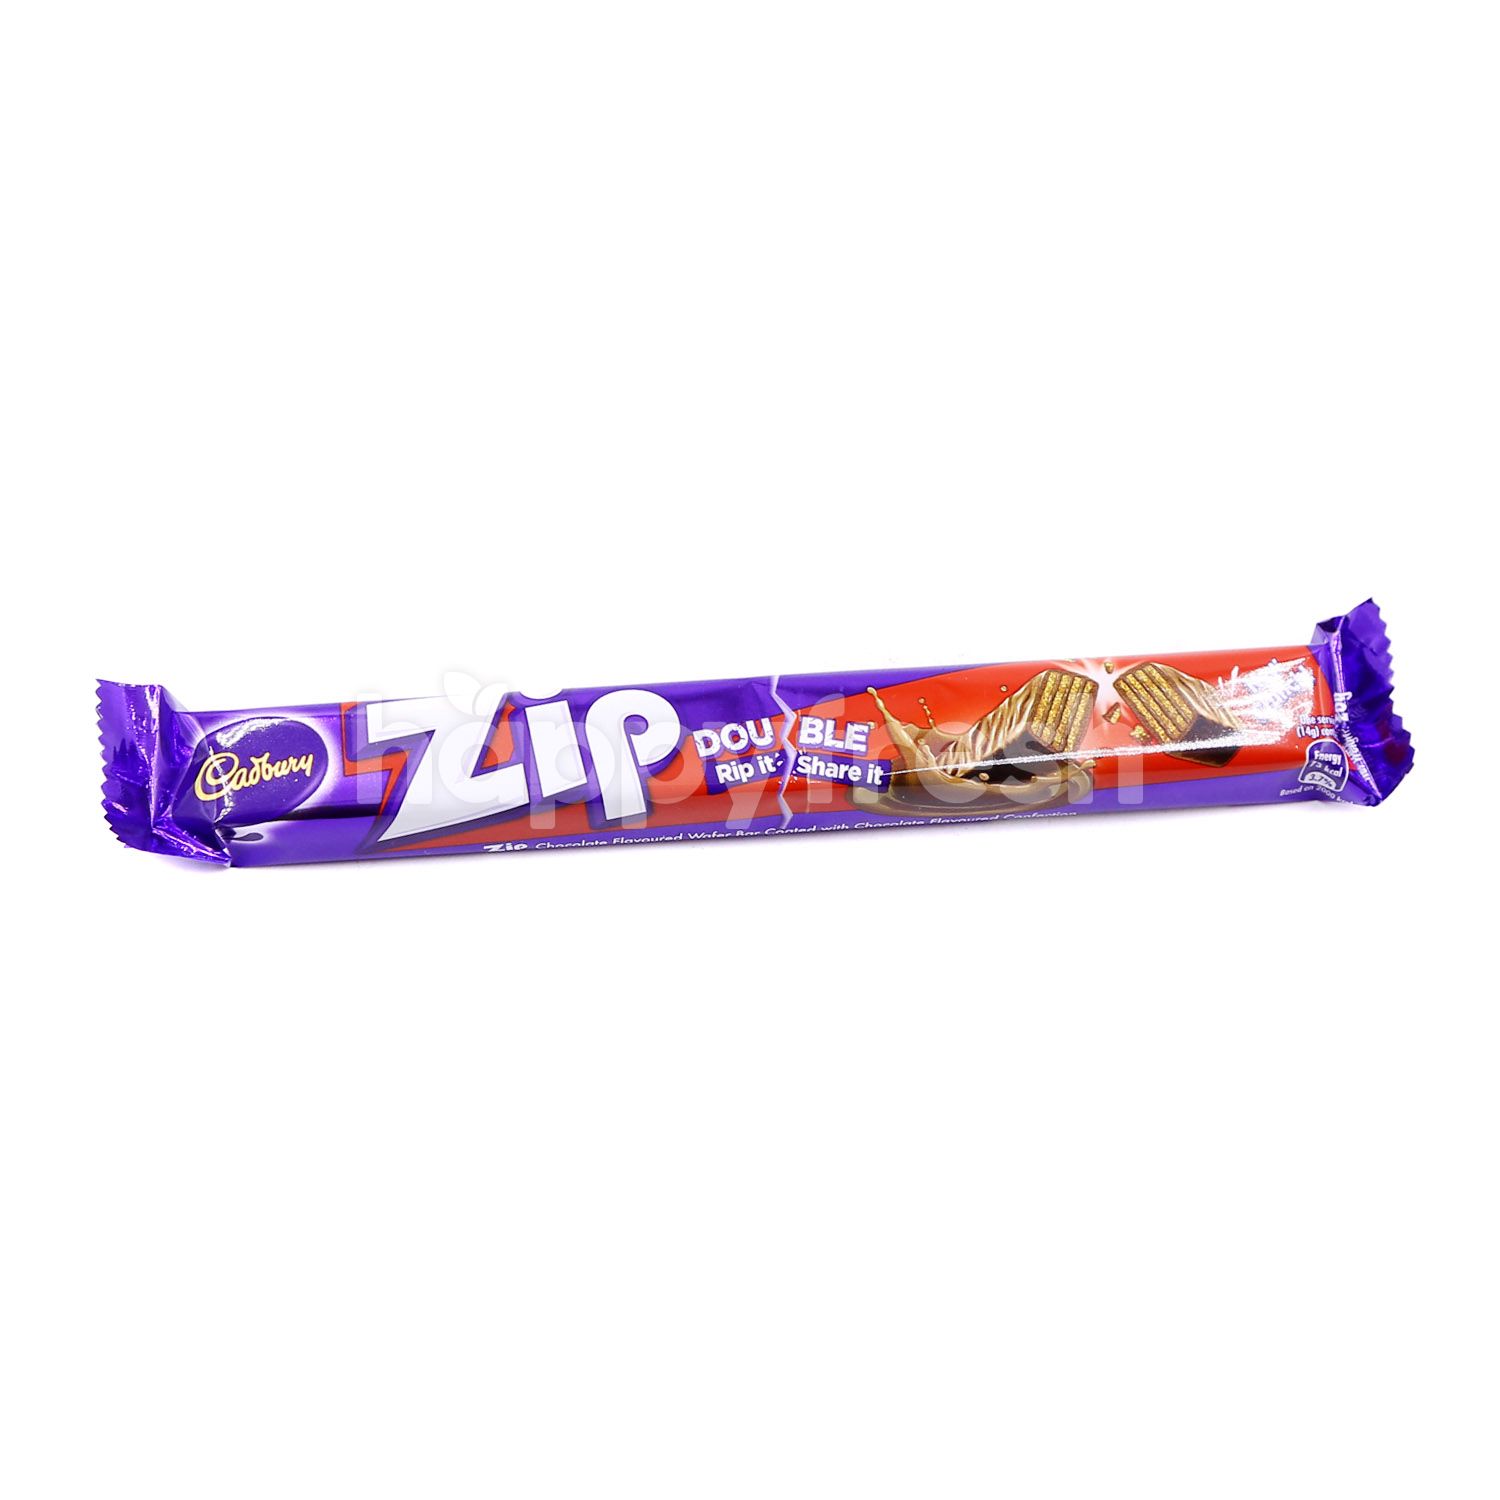 Zip cadbury Review Cadbury